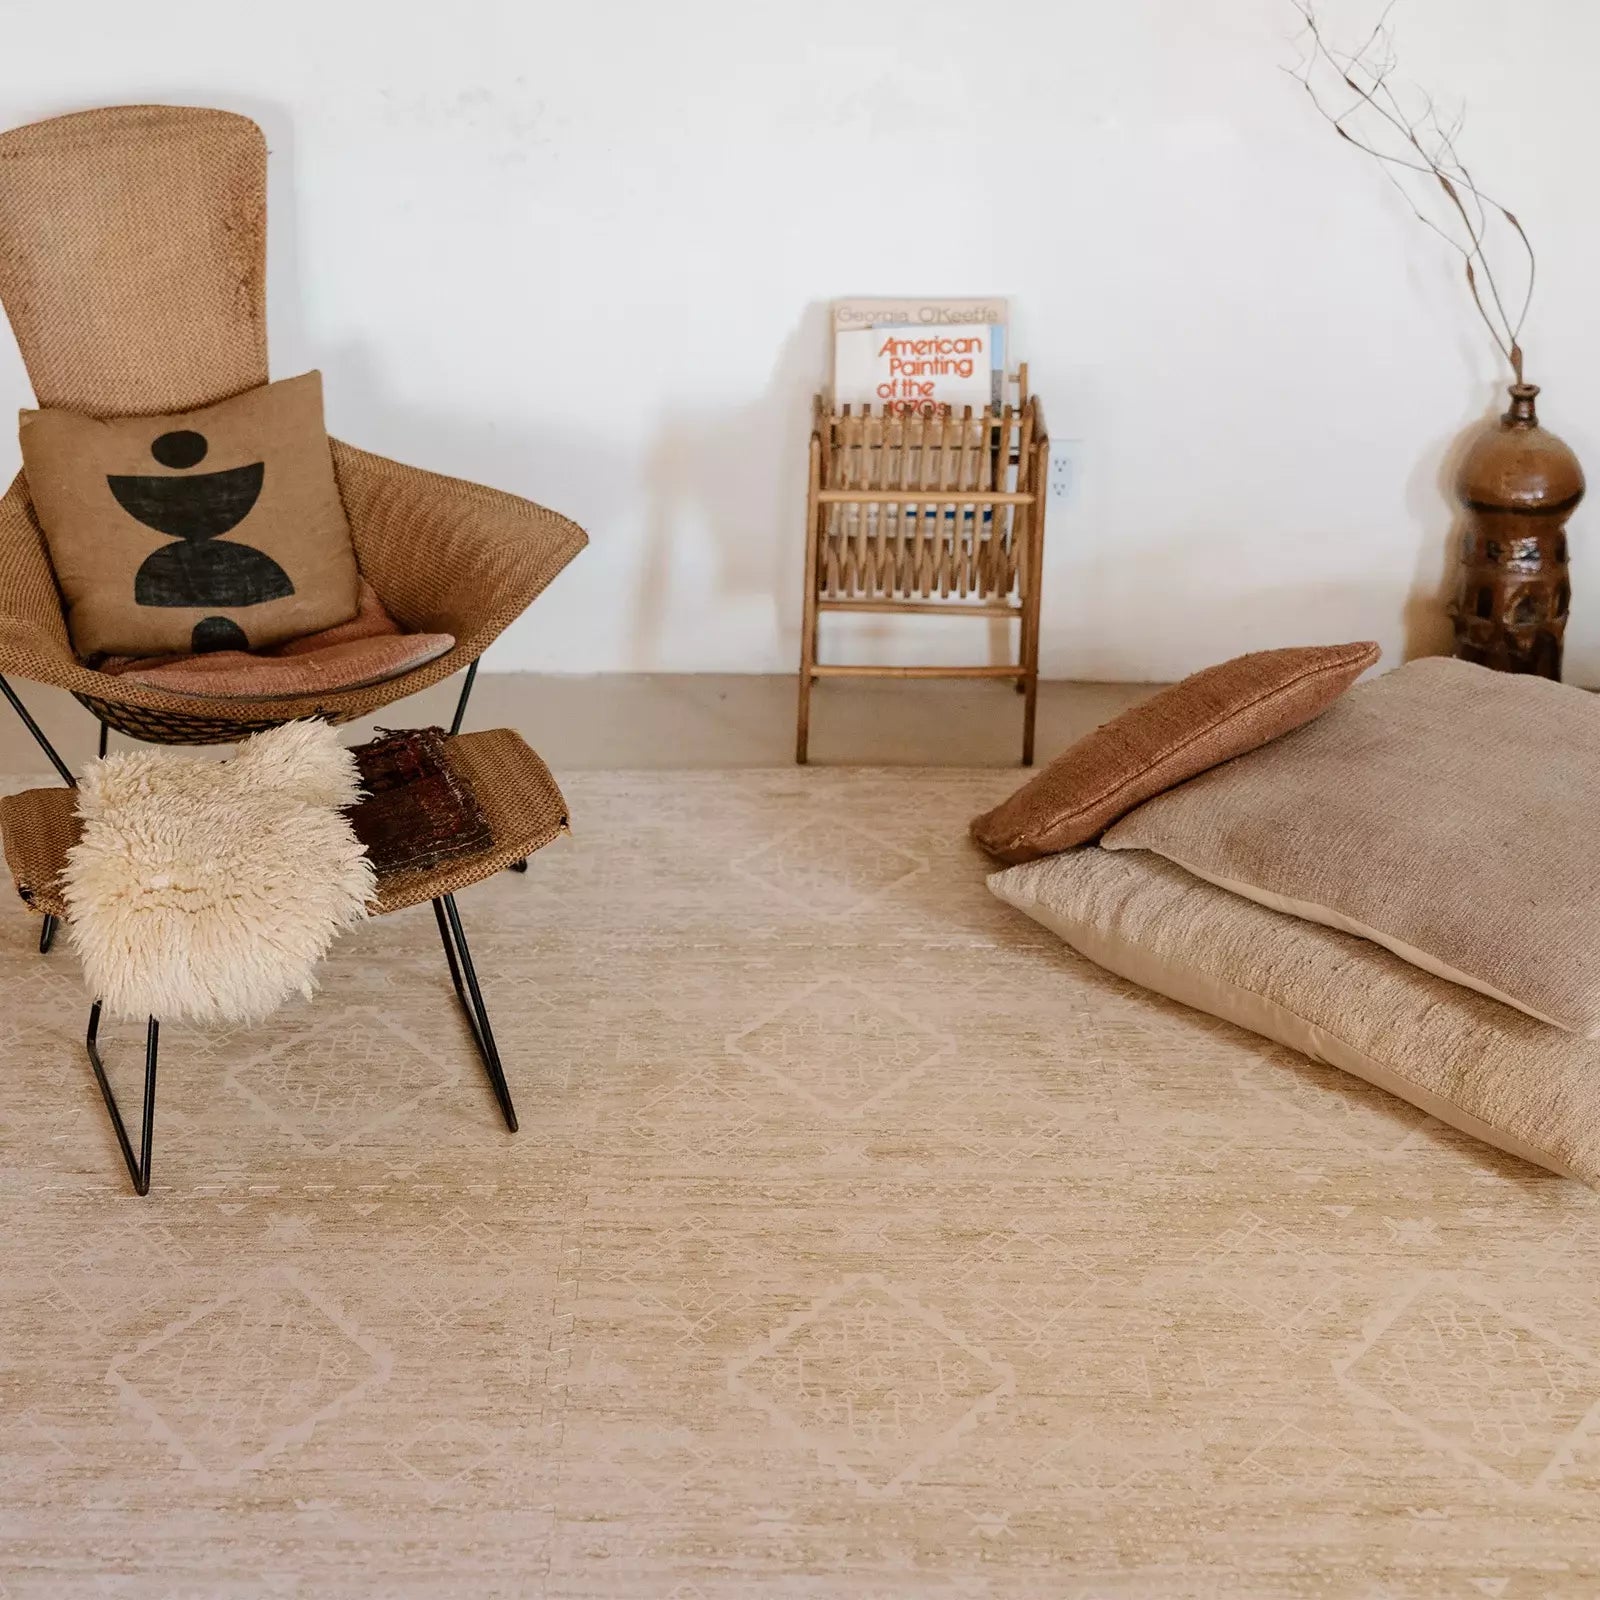 Ula Straw neutral tan minimal boho pattern play mat shown in living room